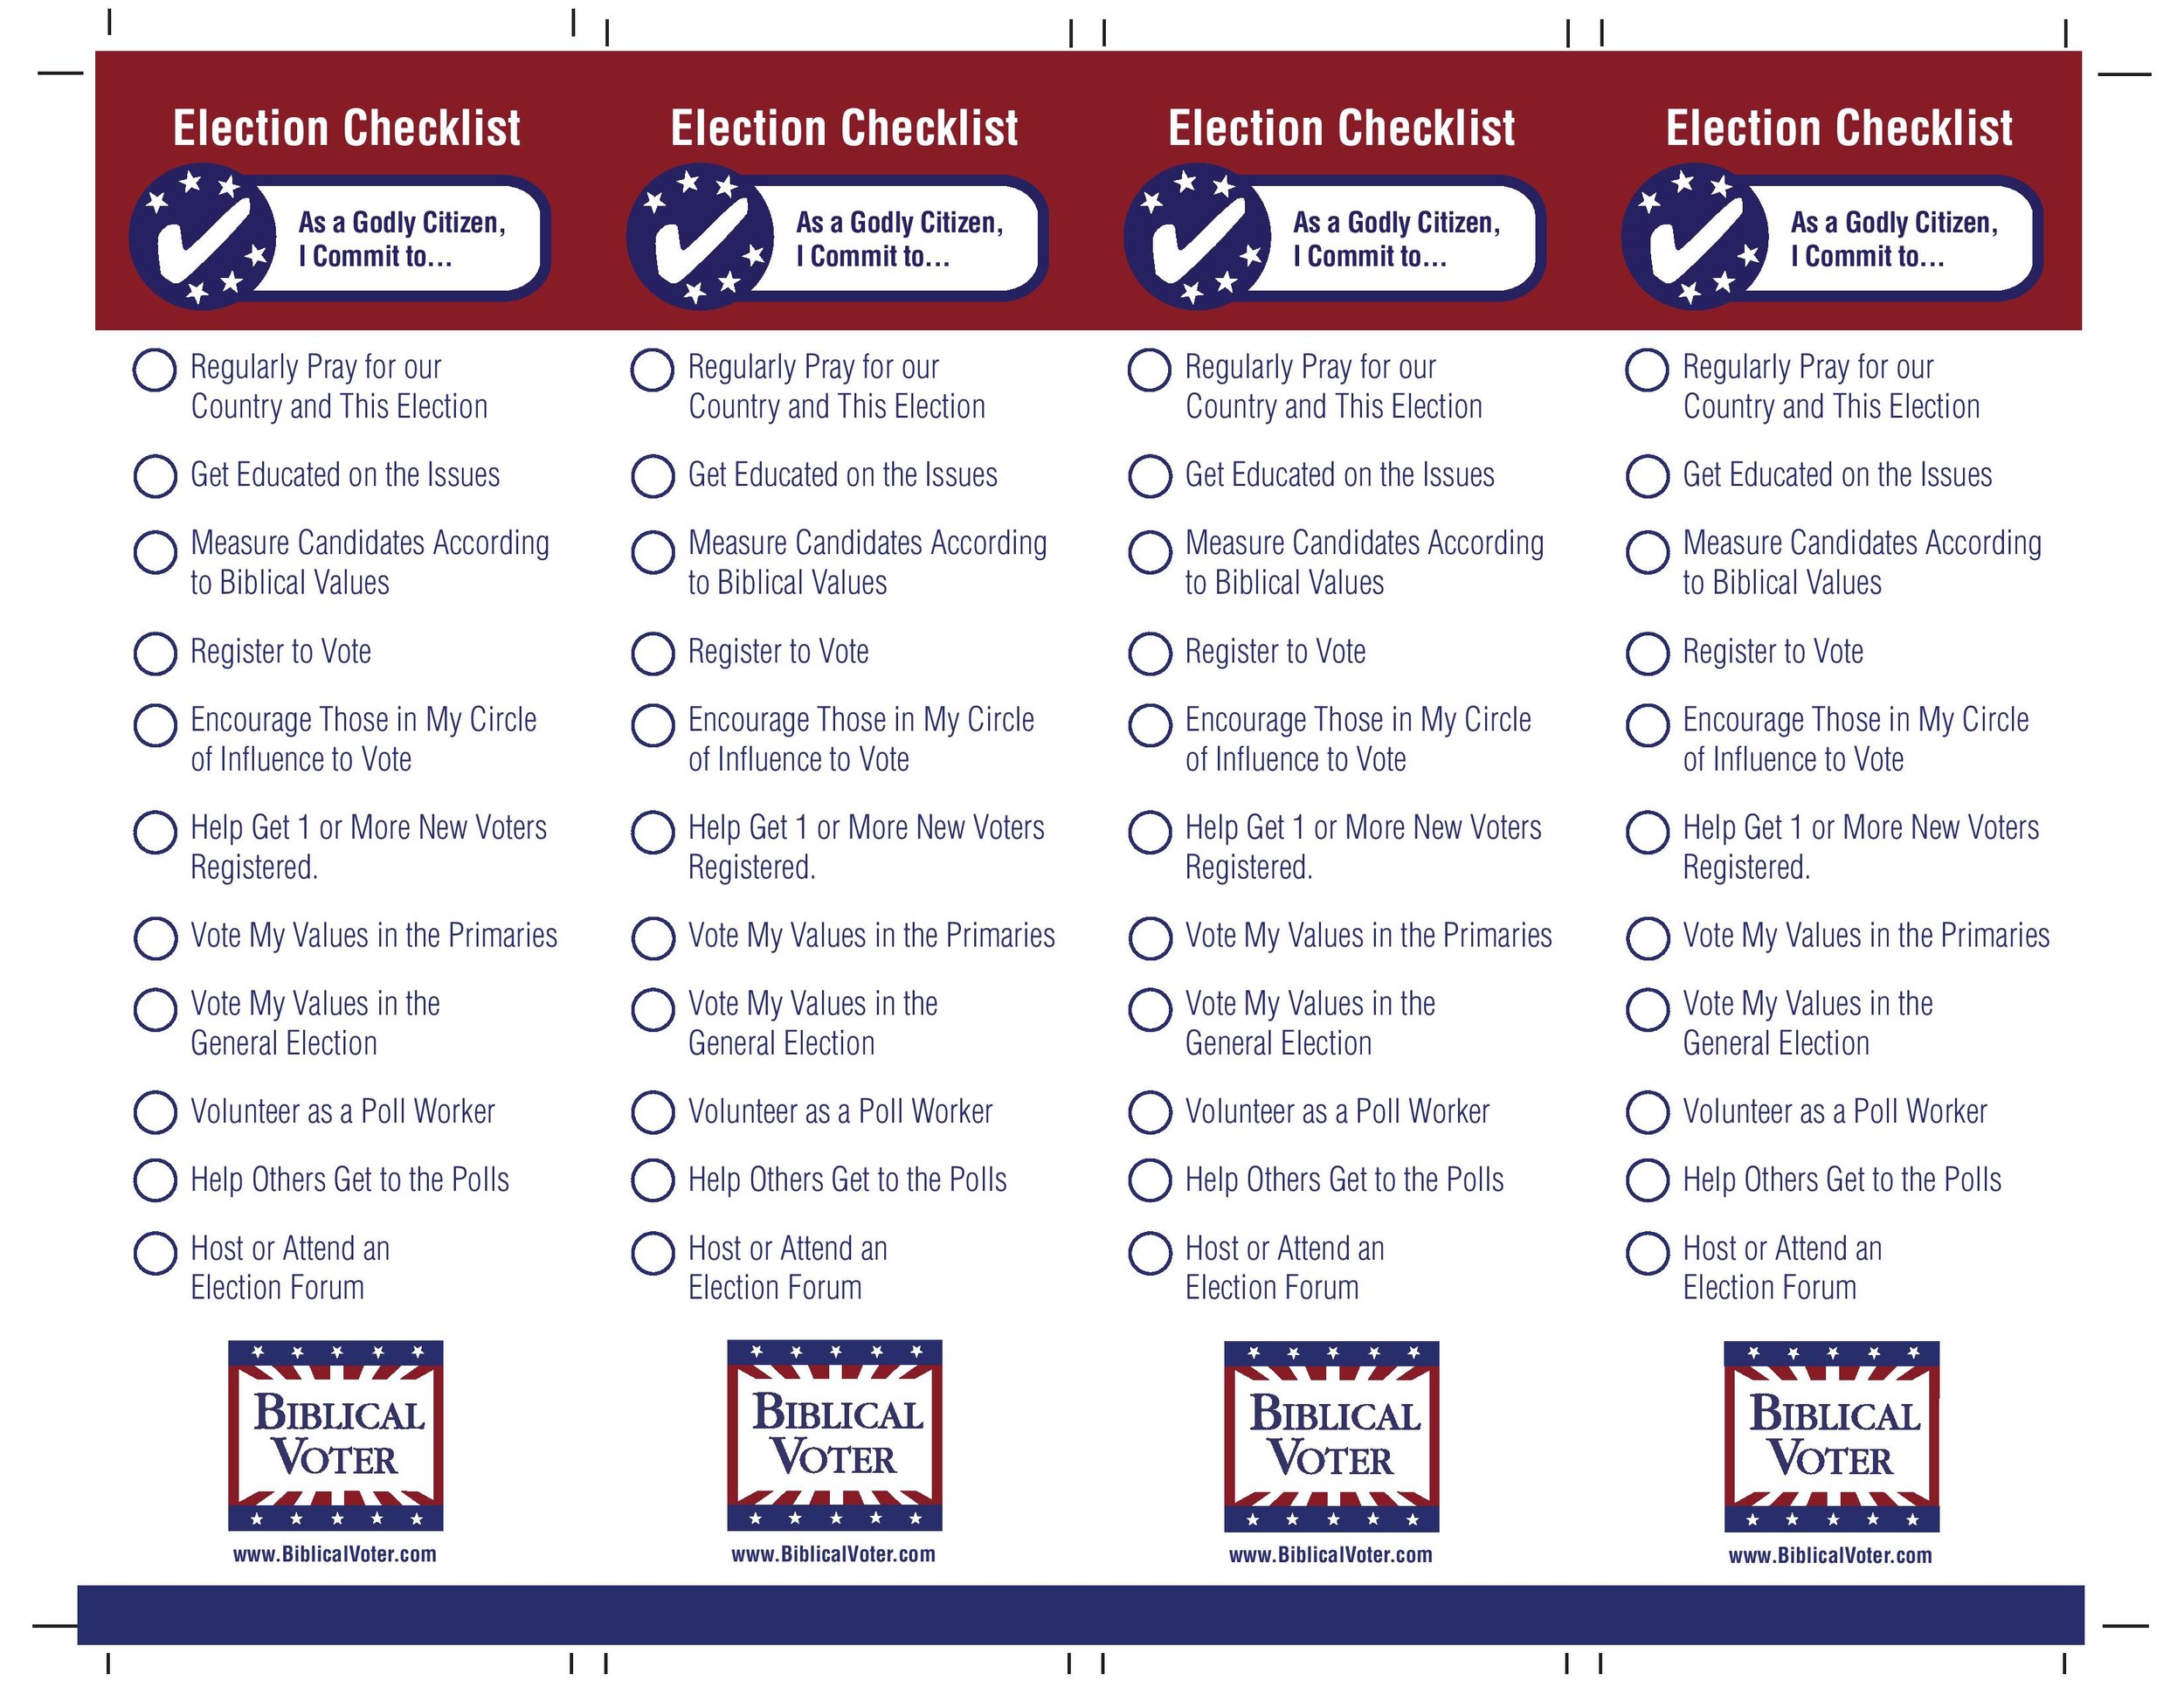 Biblical Voter Election Checklist 2019-page-001.jpg